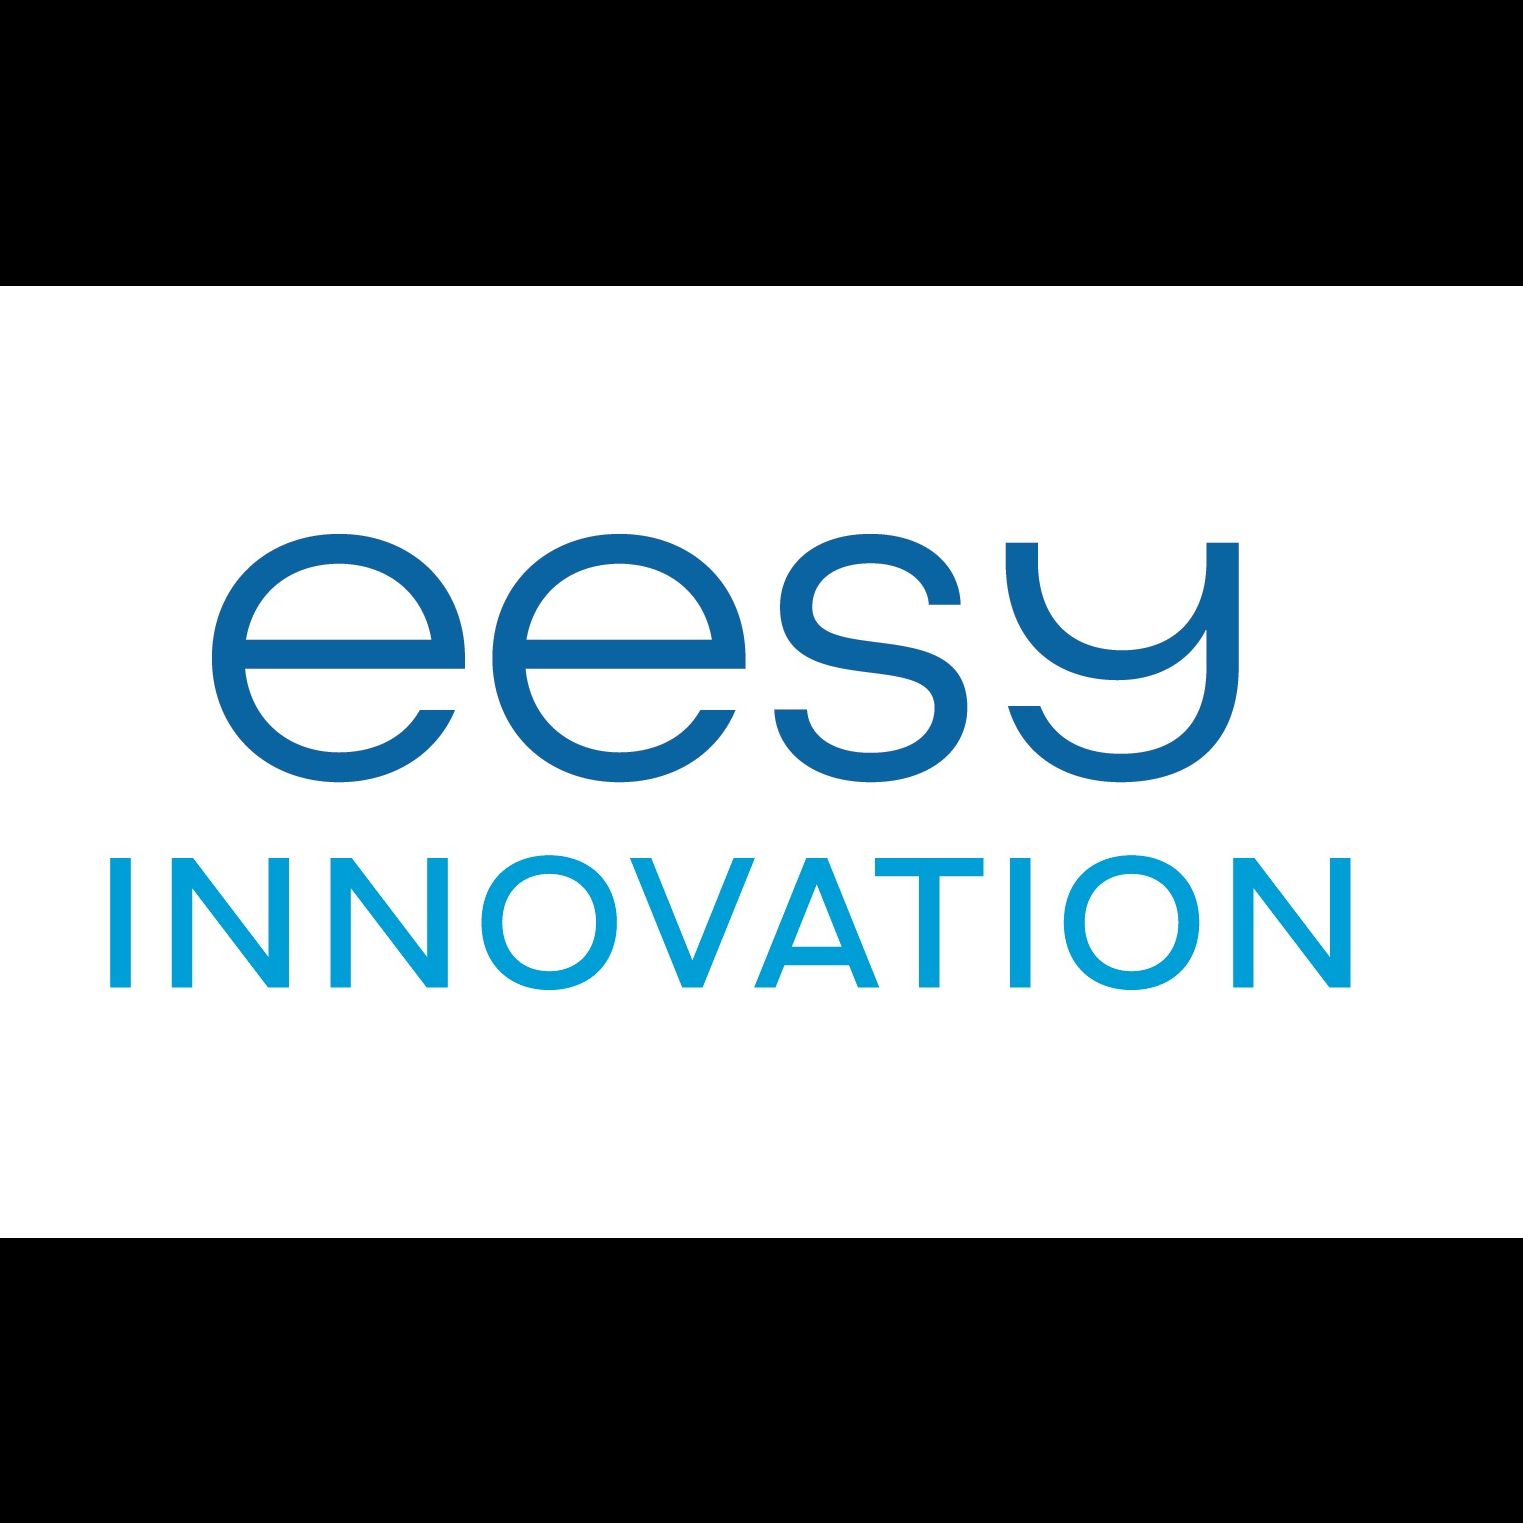 eesy-innovation GmbH